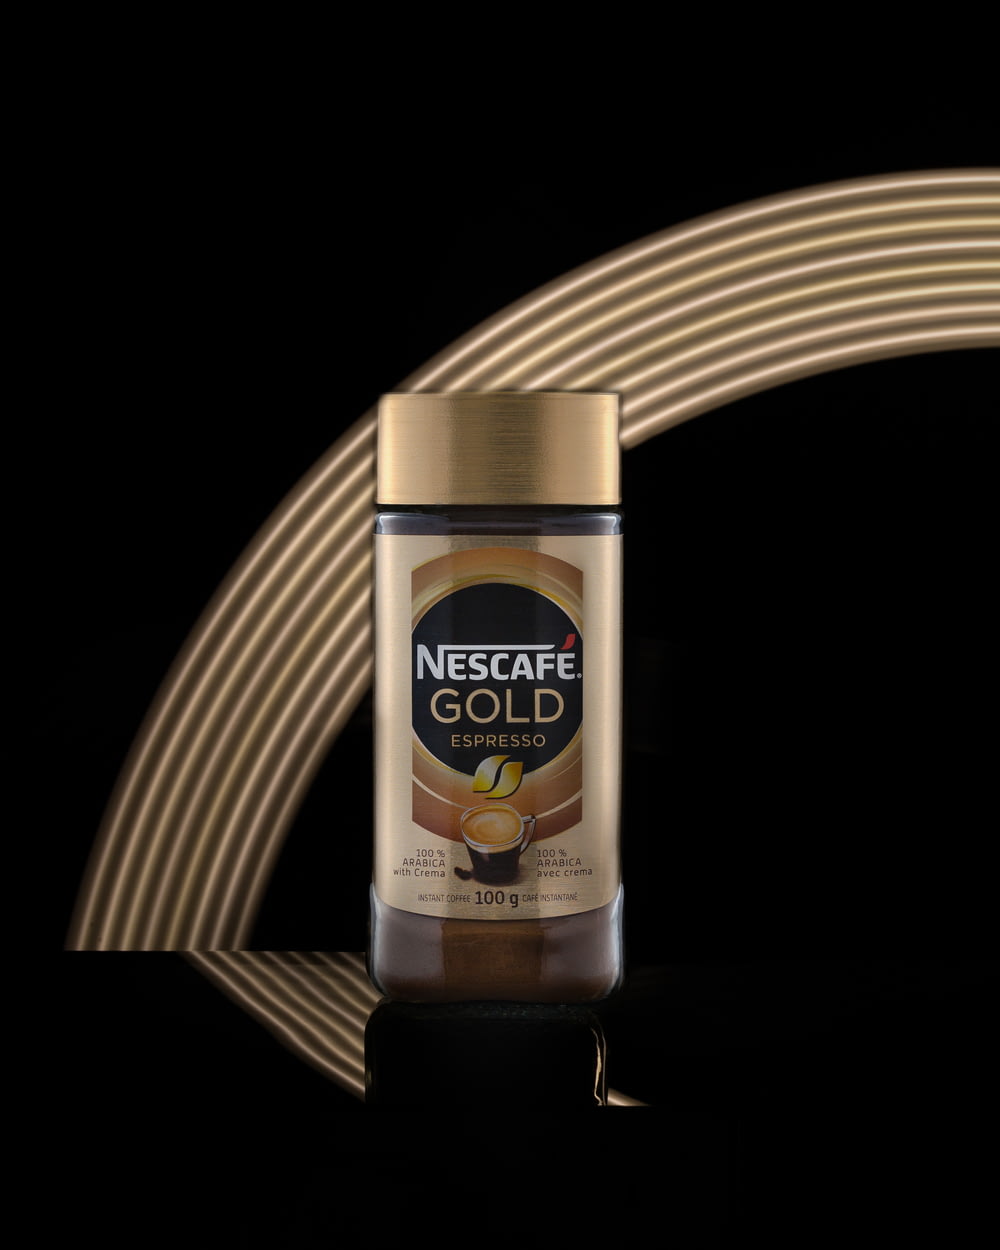 Nescafe Gold Espresso bottle